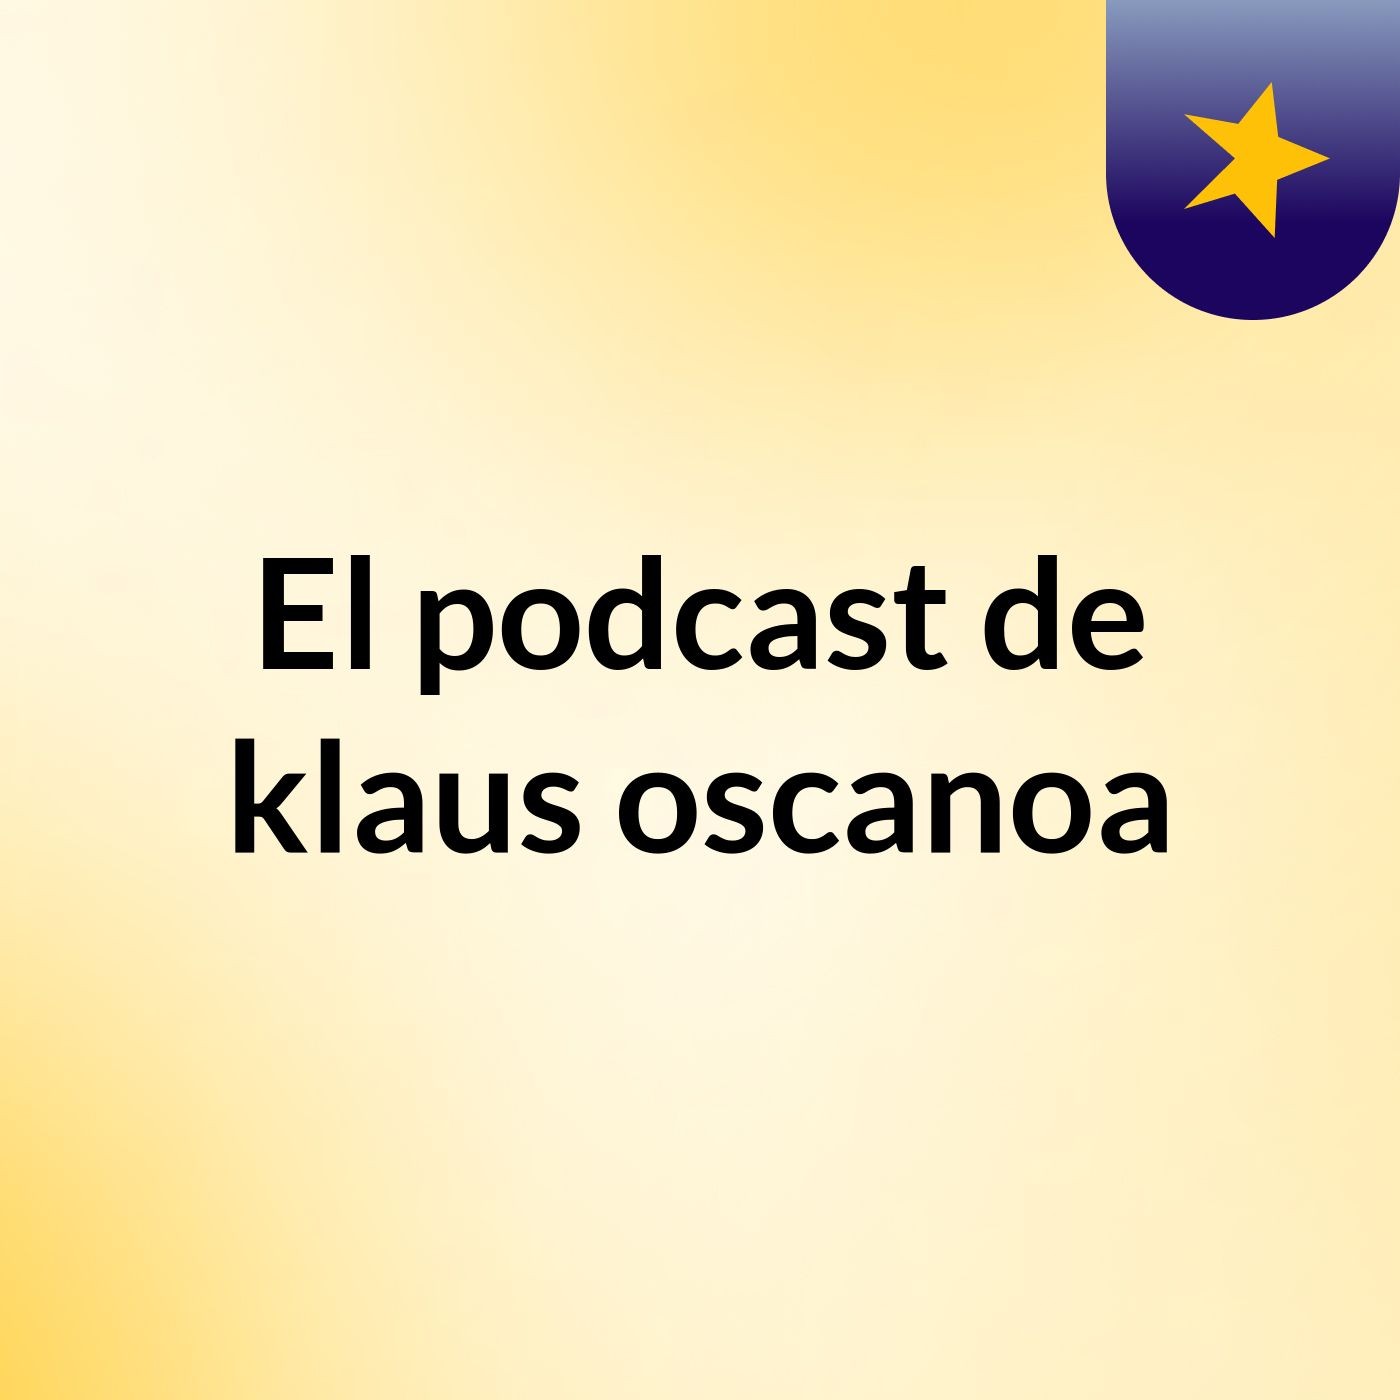 Episodio 8 - El podcast de klaus oscanoa